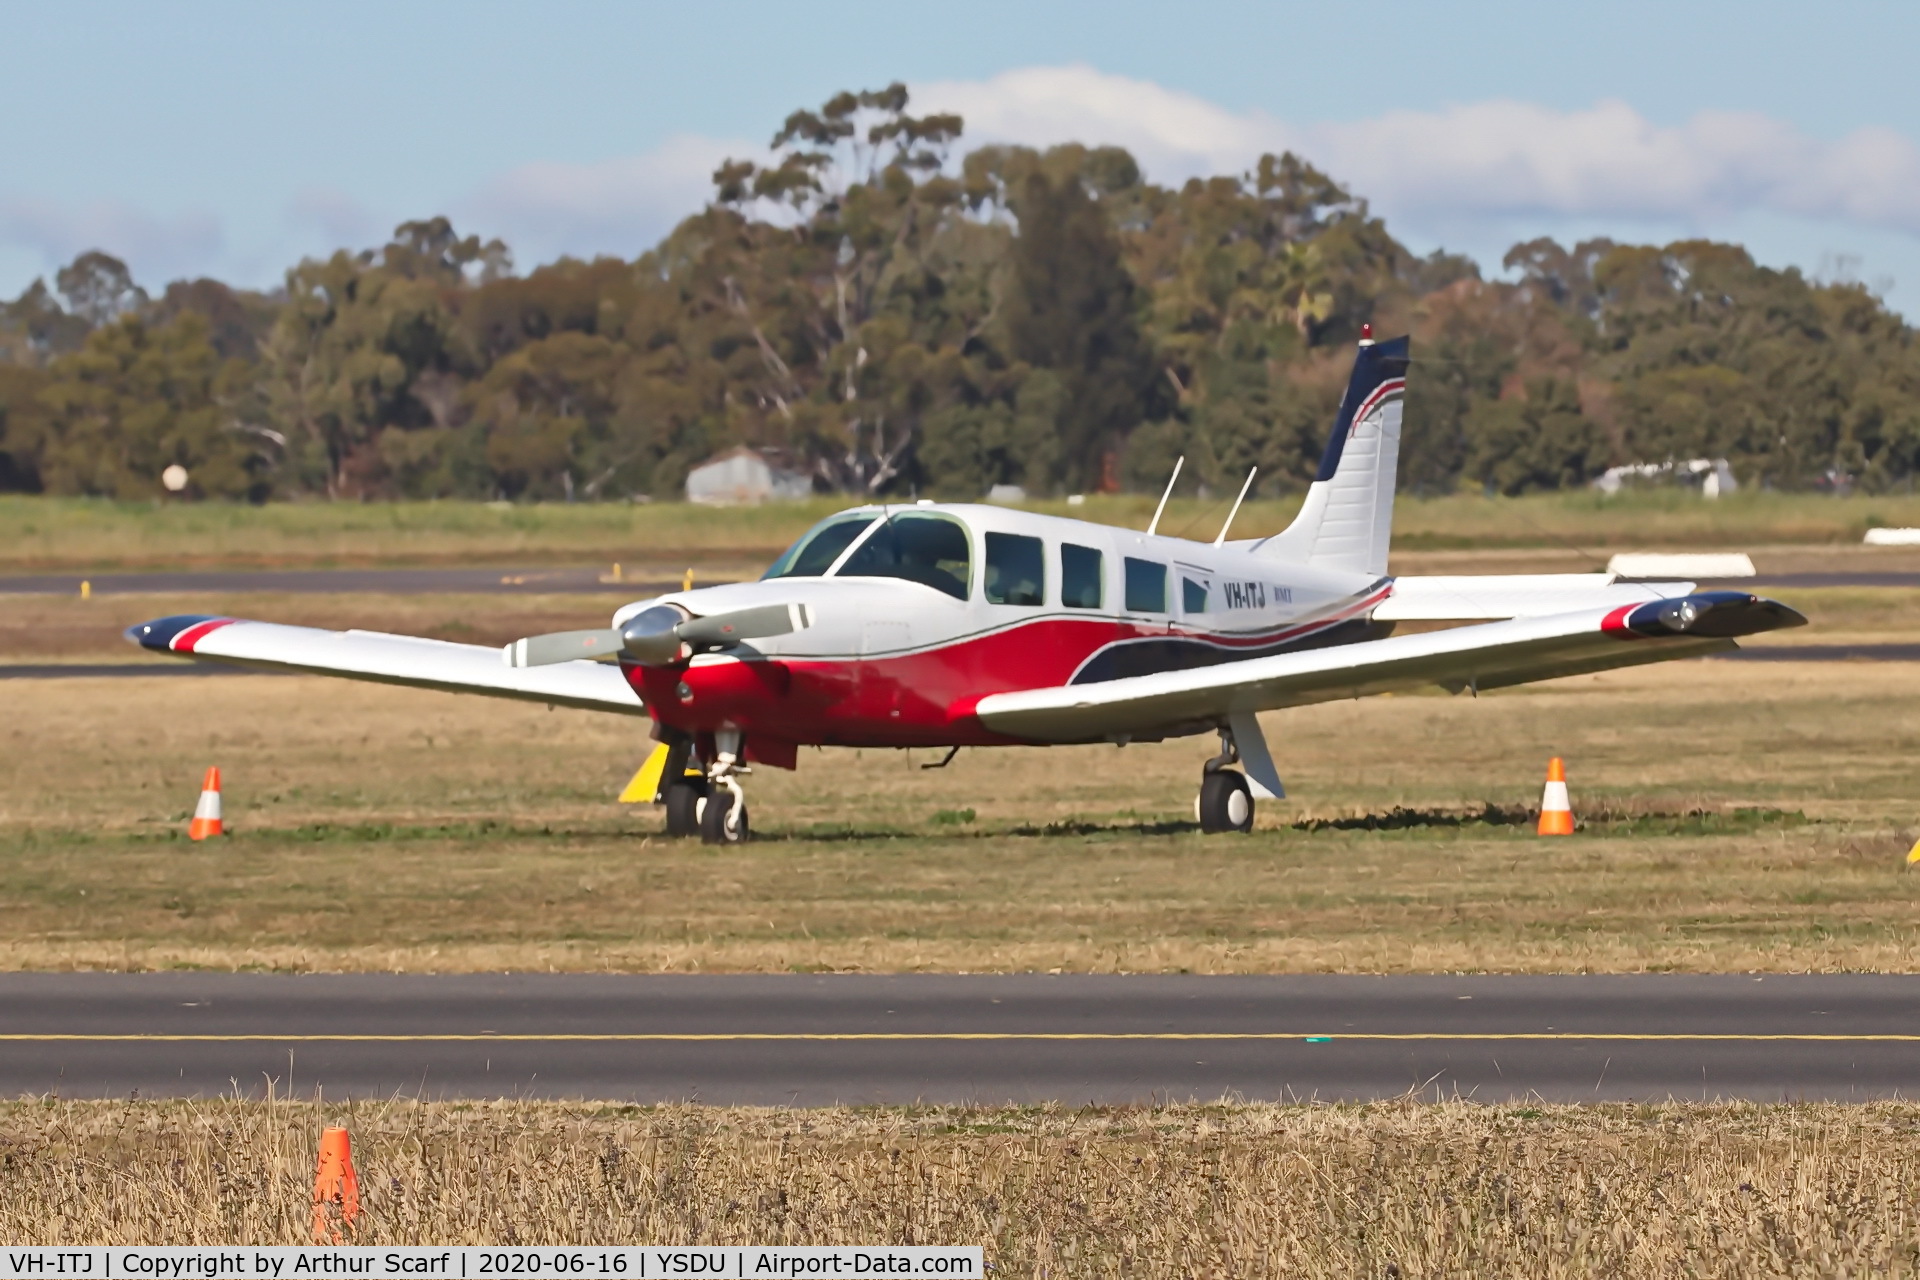 VH-ITJ, 1977 Piper PA-32R-300 Cherokee Lance C/N 32R-7780145, DUBBO Airport NSW June 2020